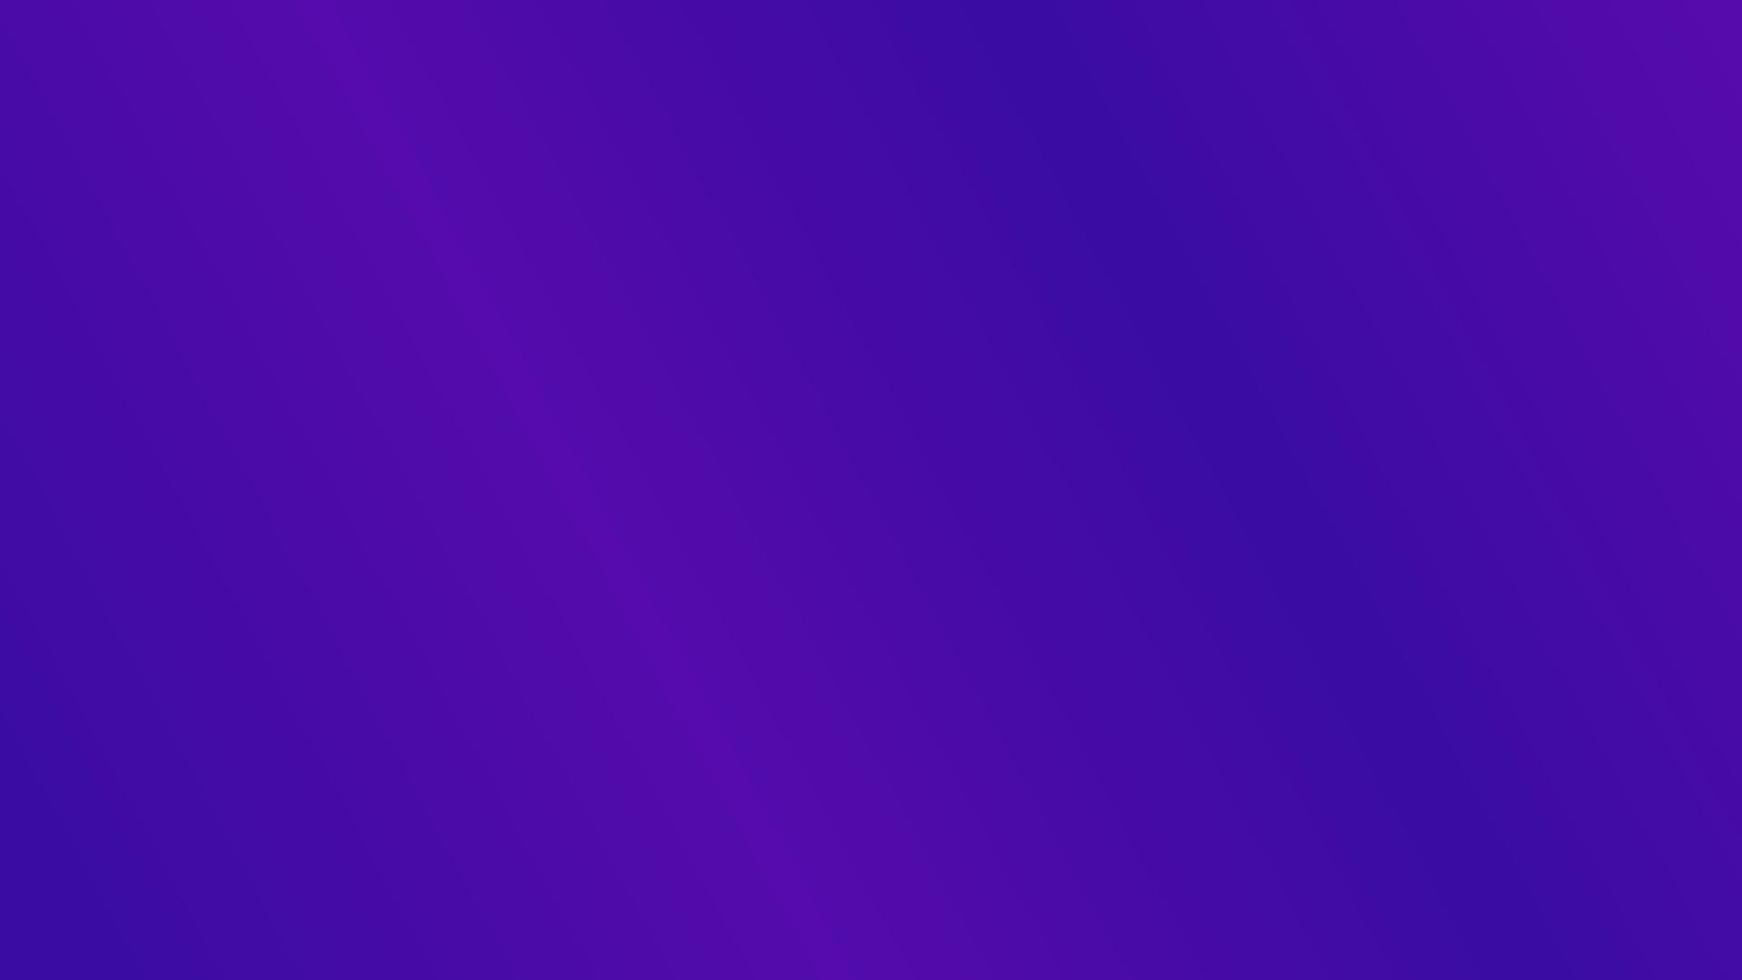 illustration vector graphic of violet gradient background, violet texture